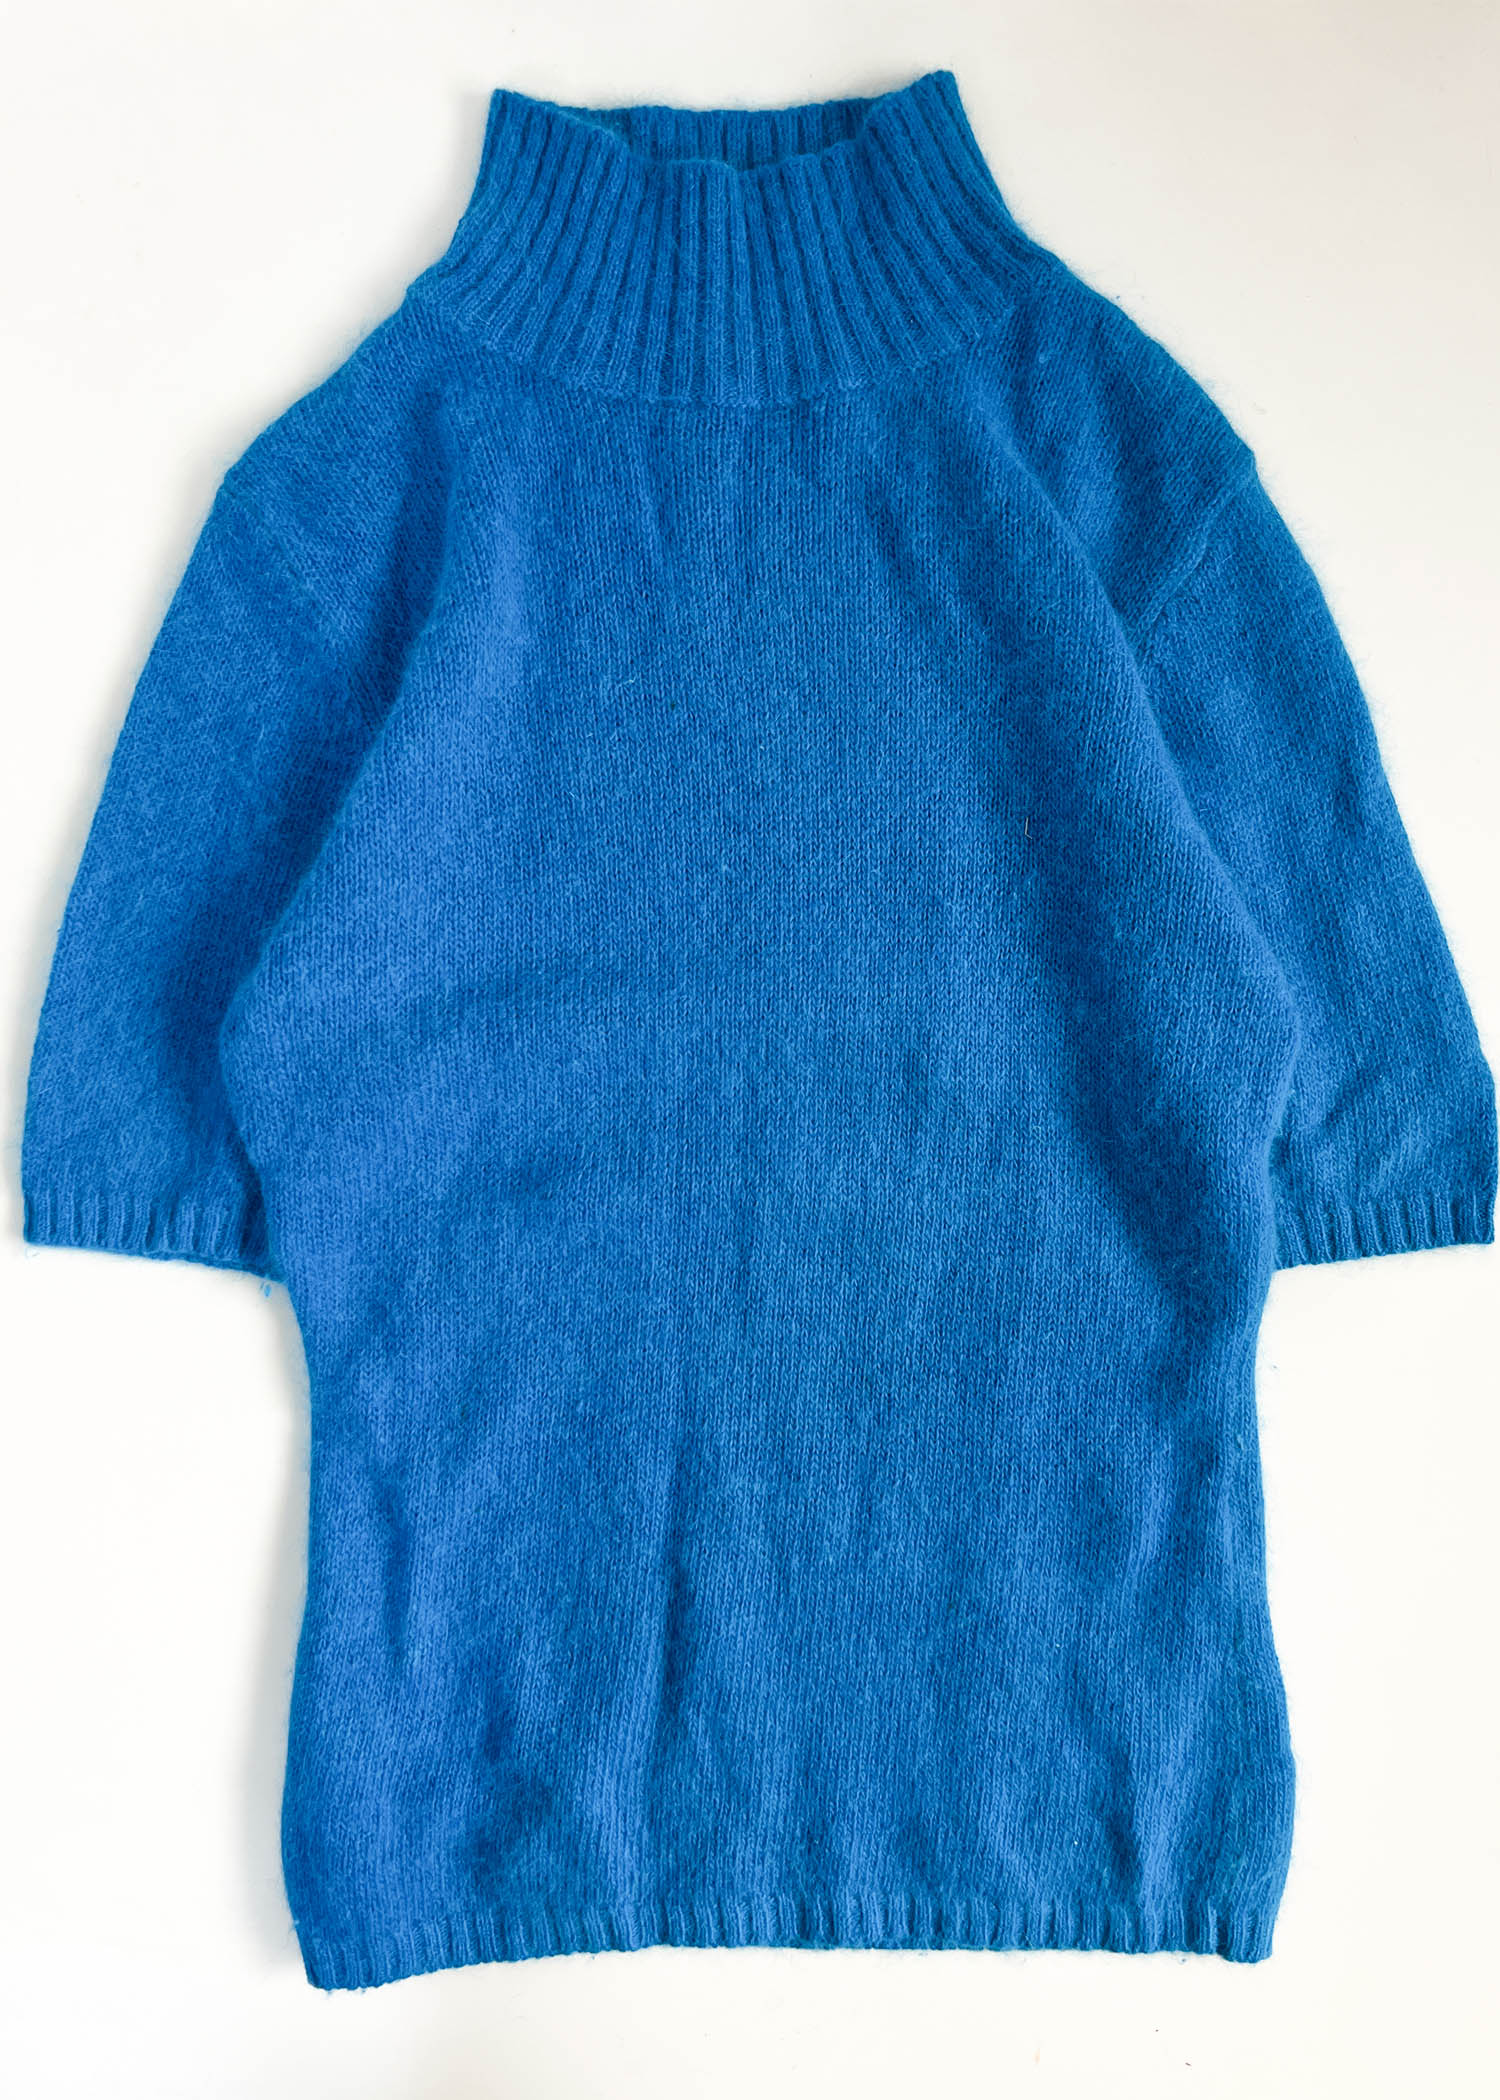 vintage shaggy knit top